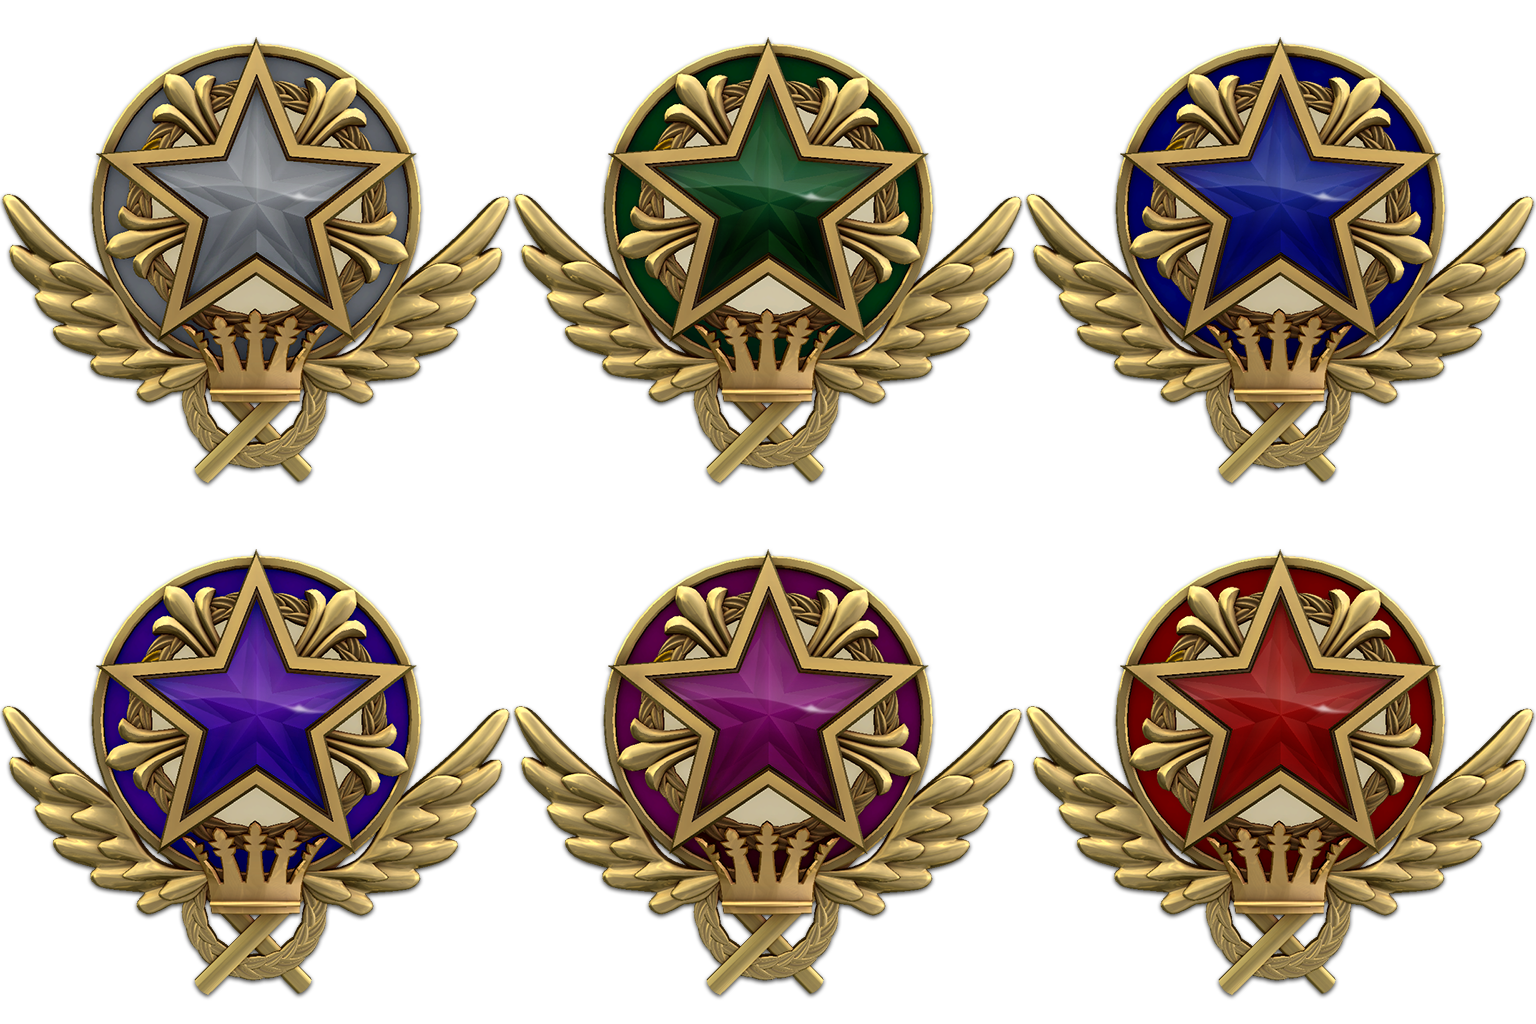 Csgo service medal colors